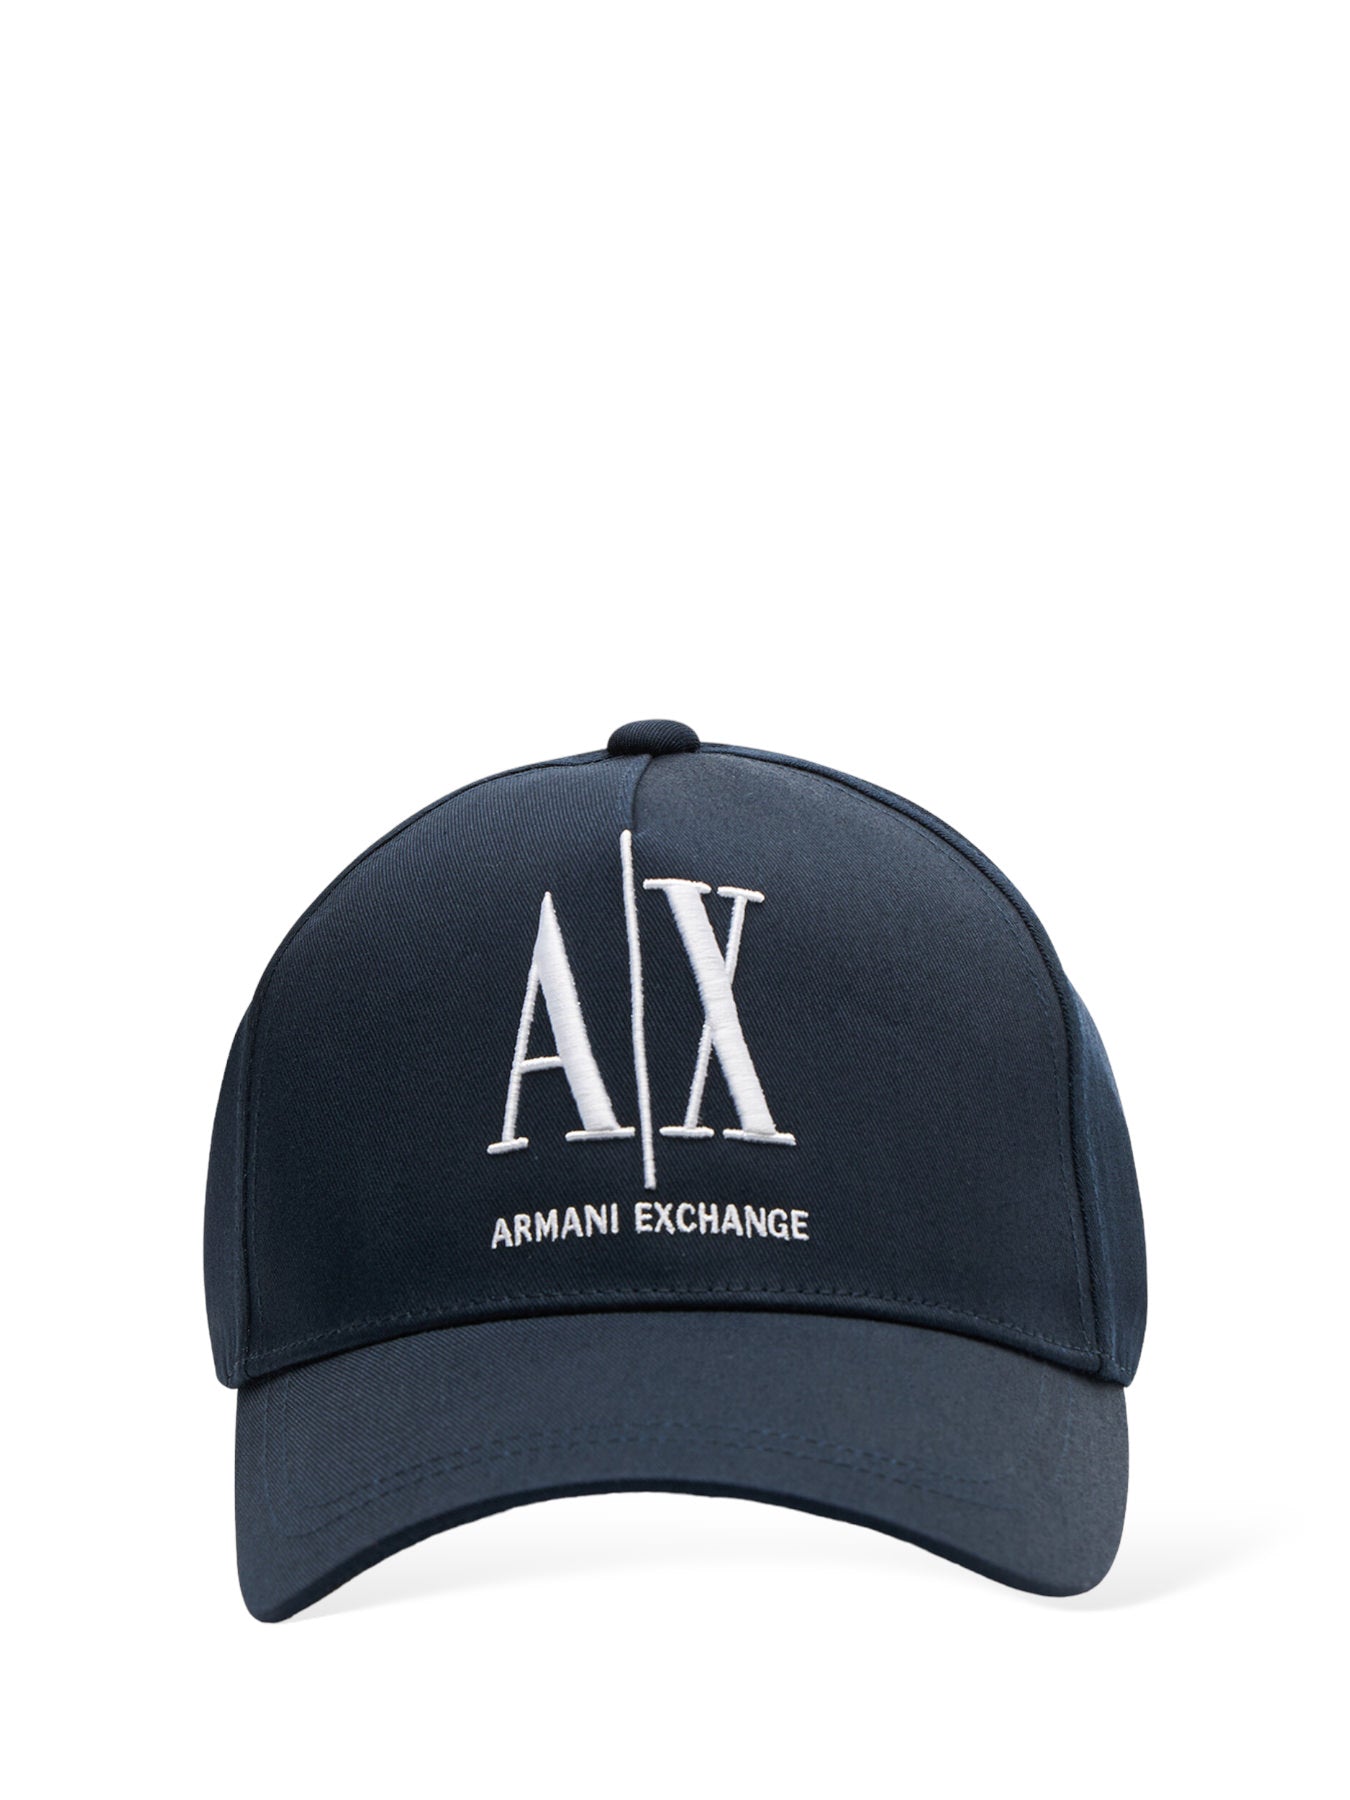 Armani Exchange Cappello Da Baseball 954047 Navy